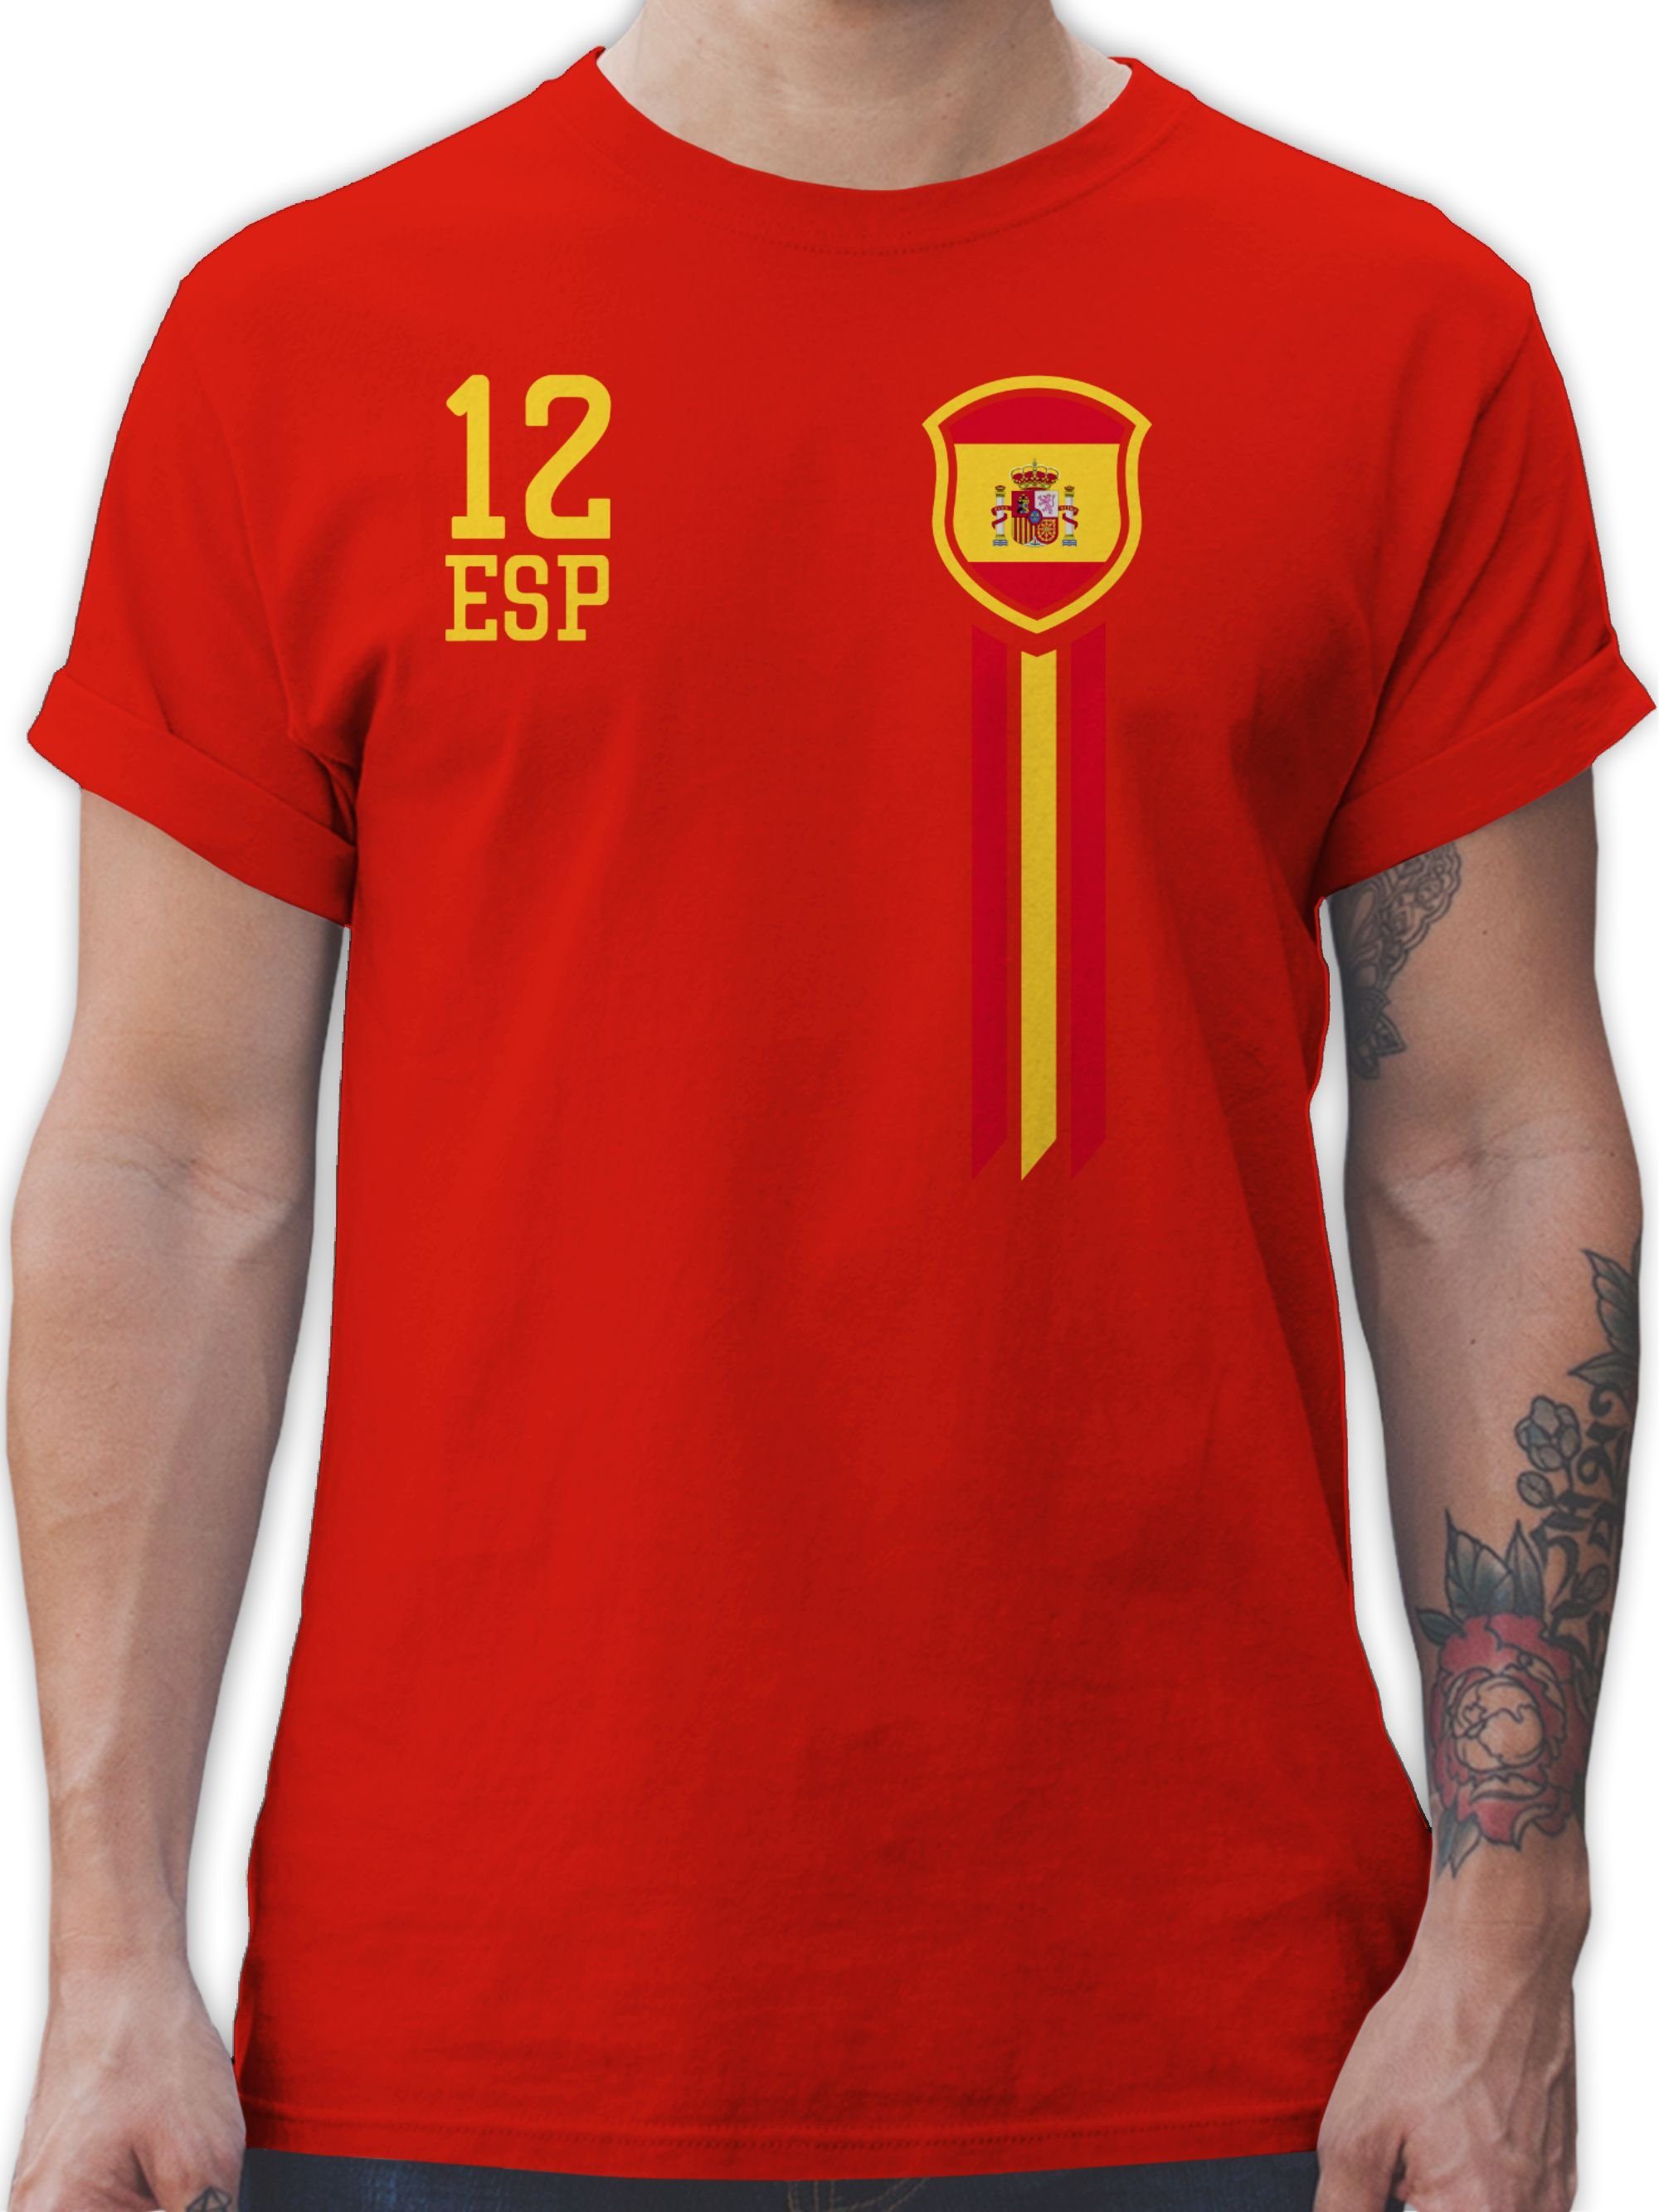 Spanien Trikot Fußball WM EM Fan Trikot Rot 